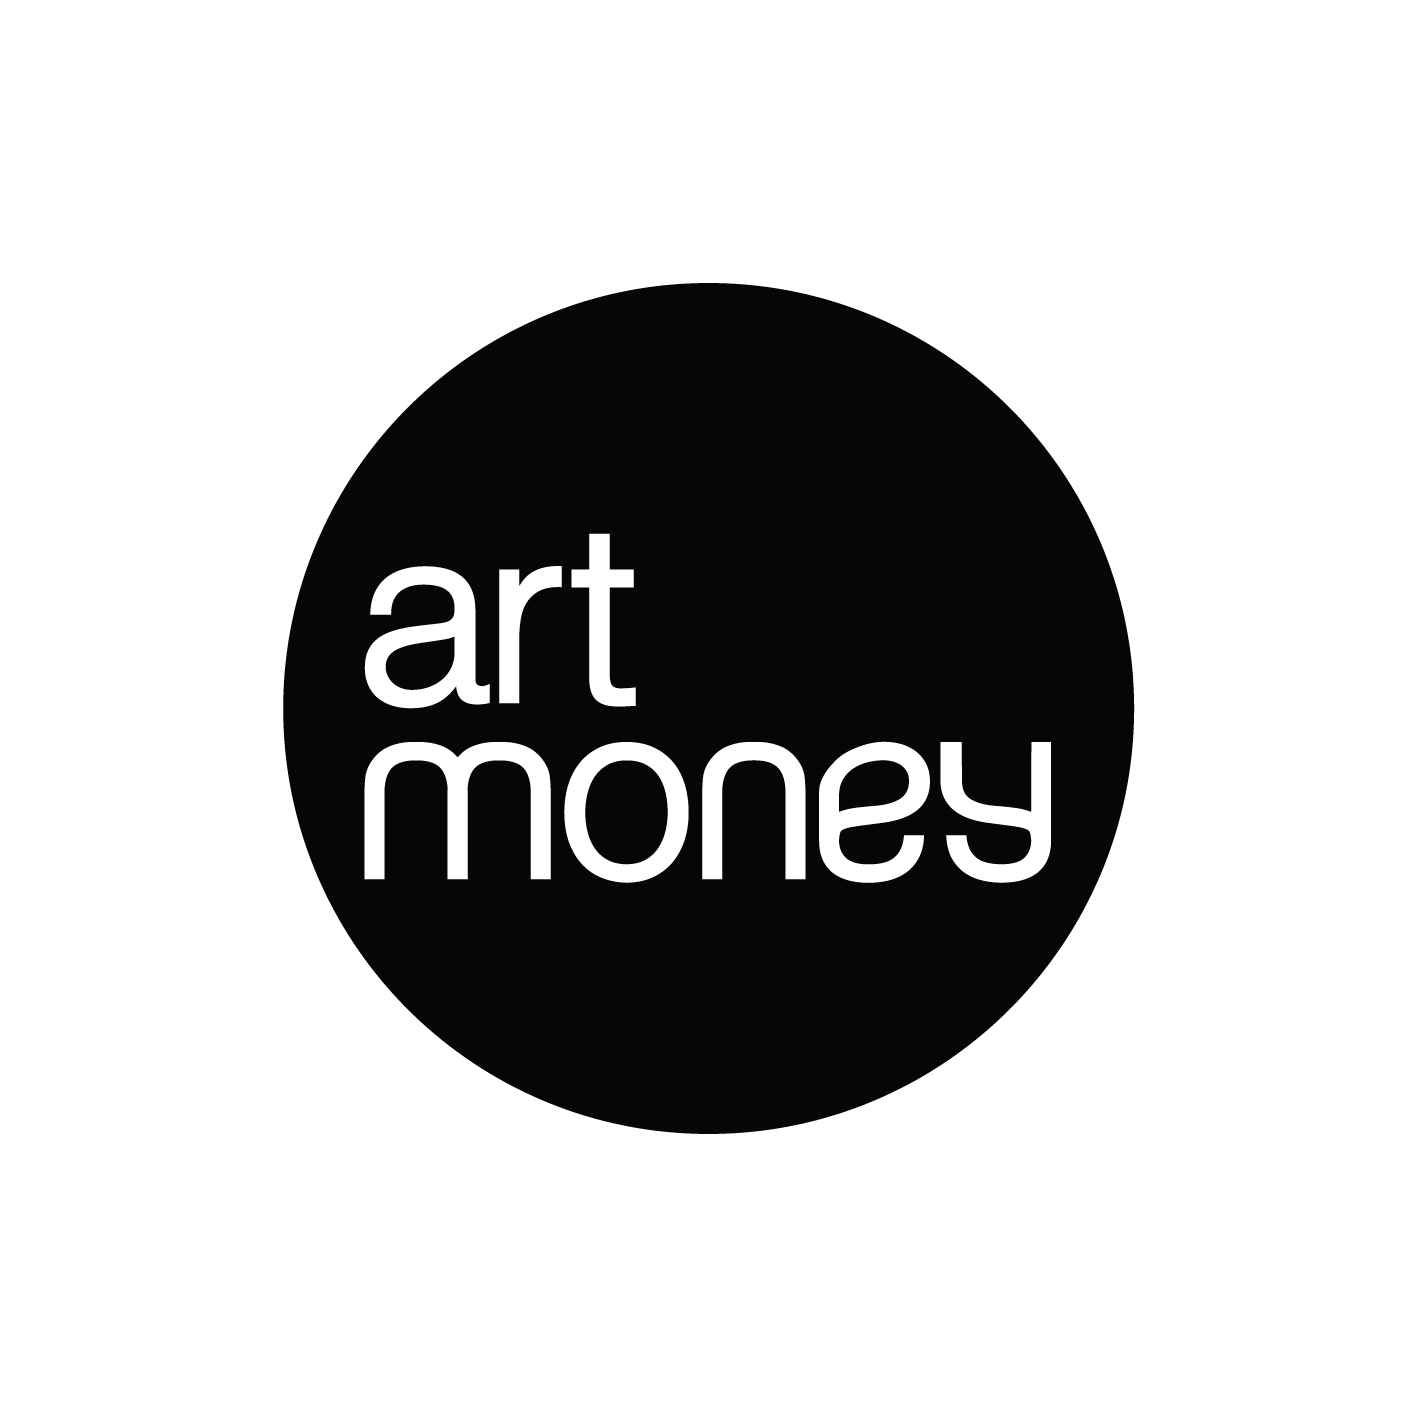 Art Money (Interest-Free Art Purchase Program) Available at Curate Art & Design Gallery in Sorrento Mornington Peninsula Melbourne